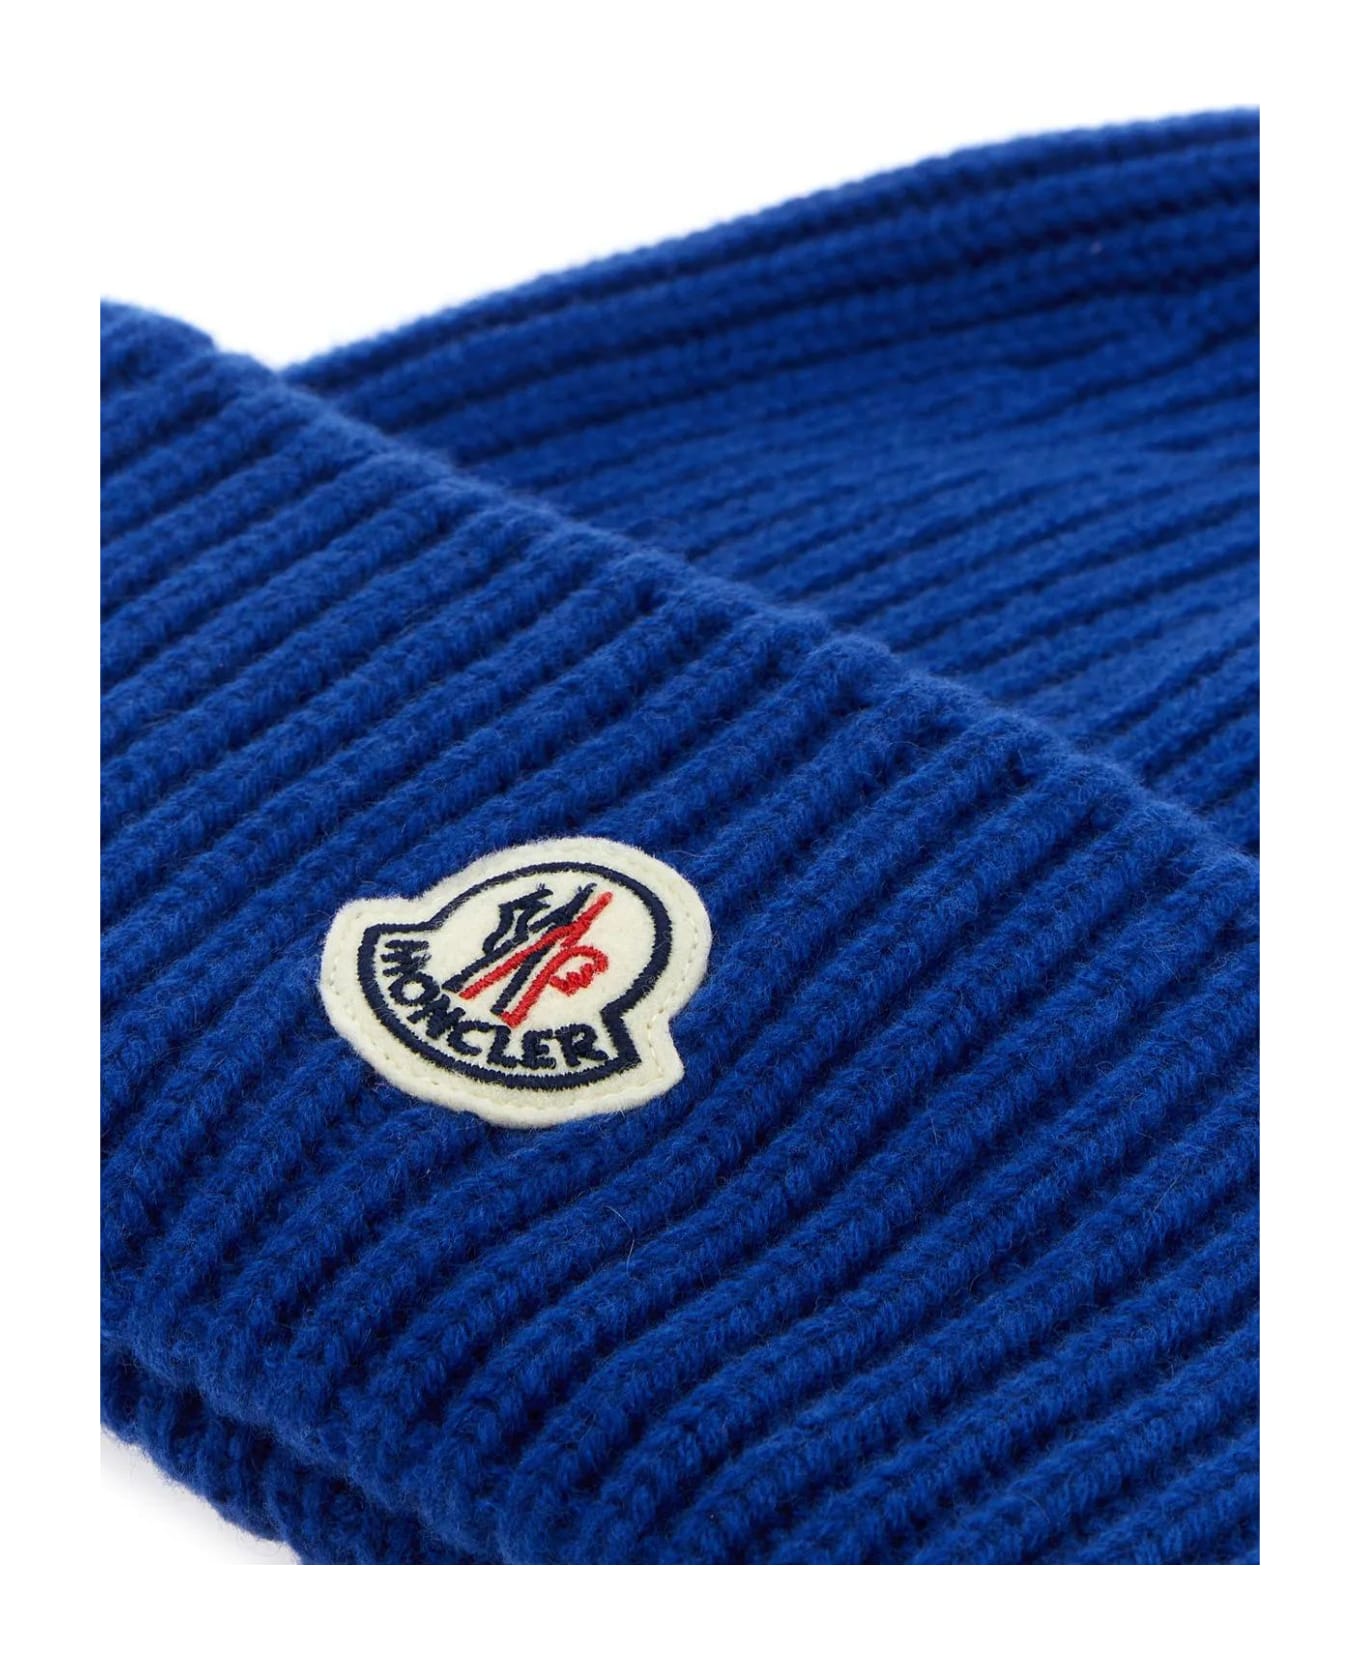 Moncler Electric Blue Wool Blend Beanie Hat - Blue 帽子